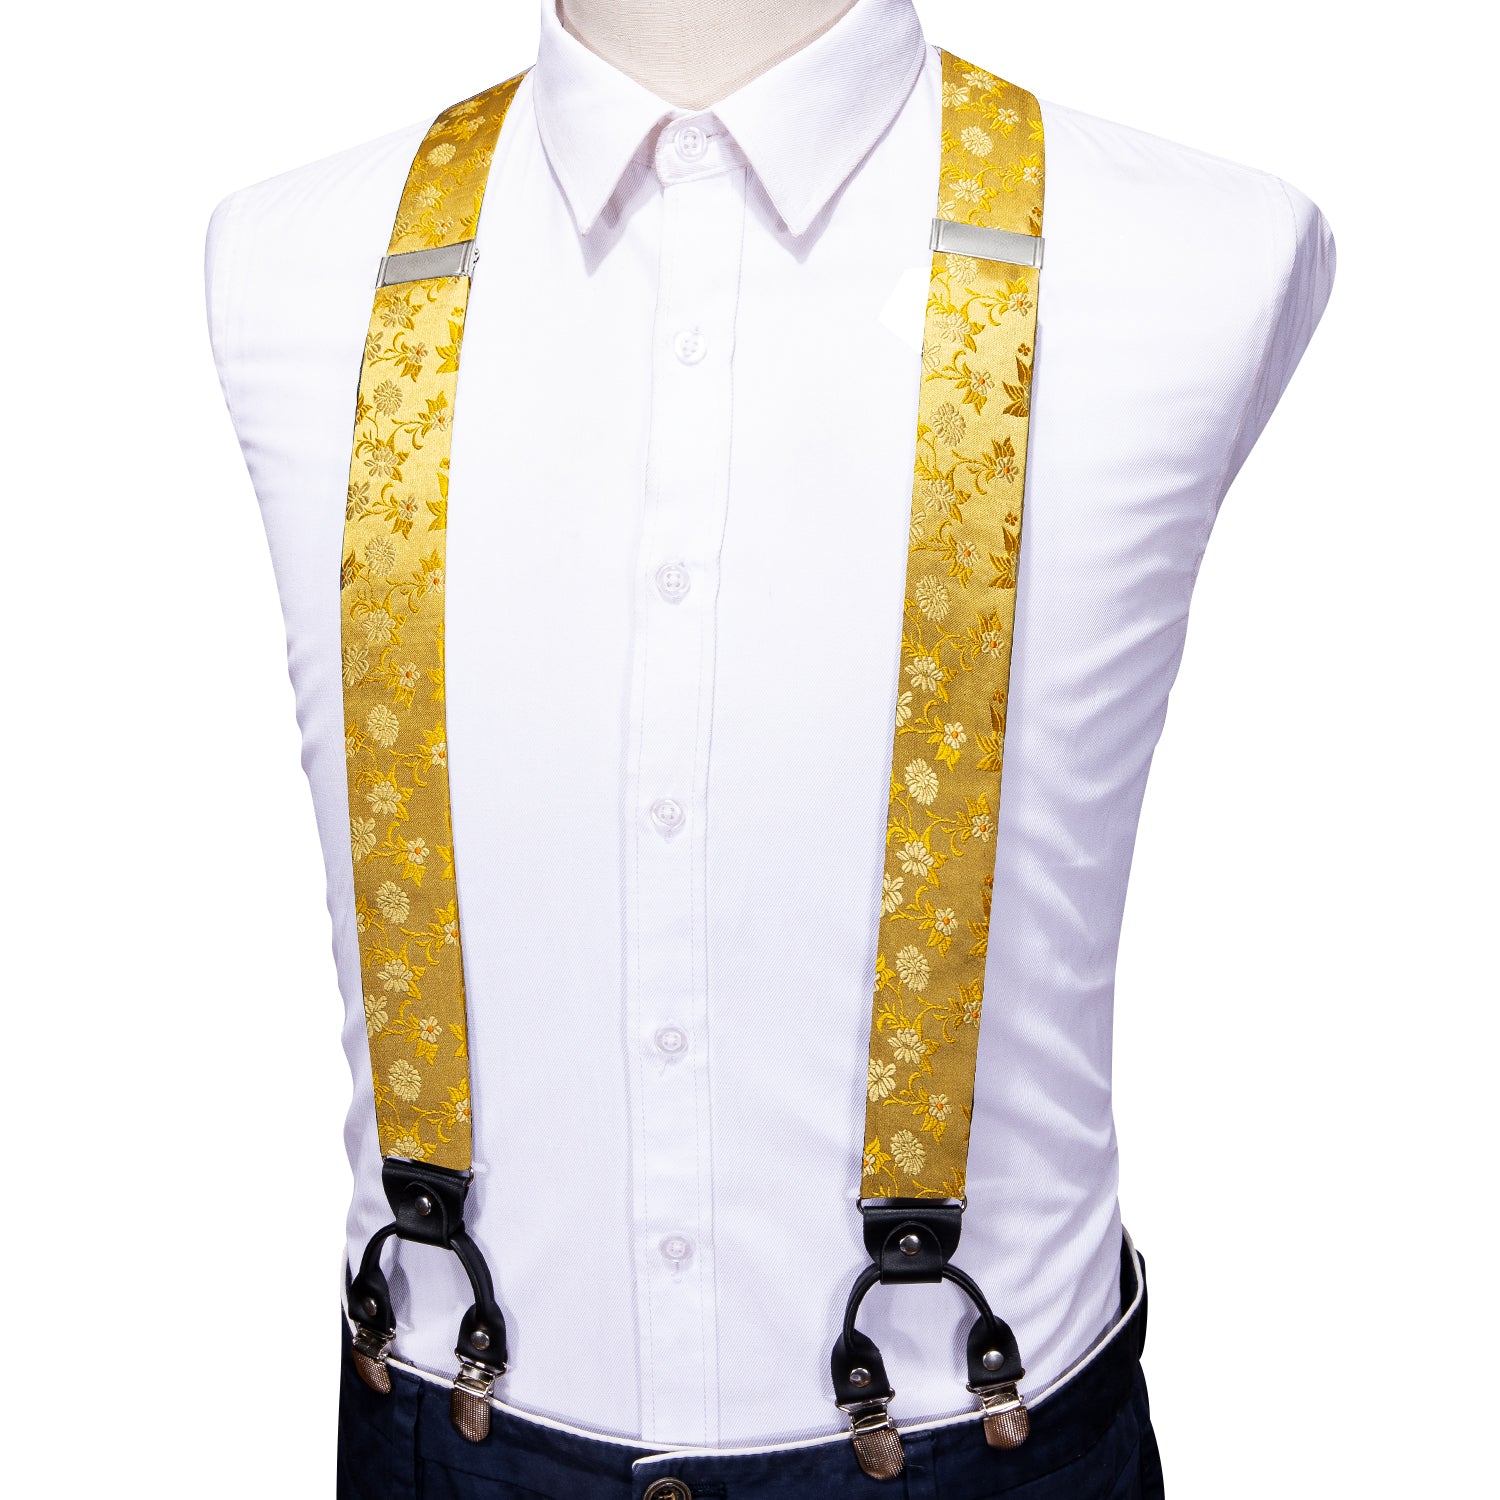 Gold Flower Y Back Adjustable Bow Tie Suspenders Set